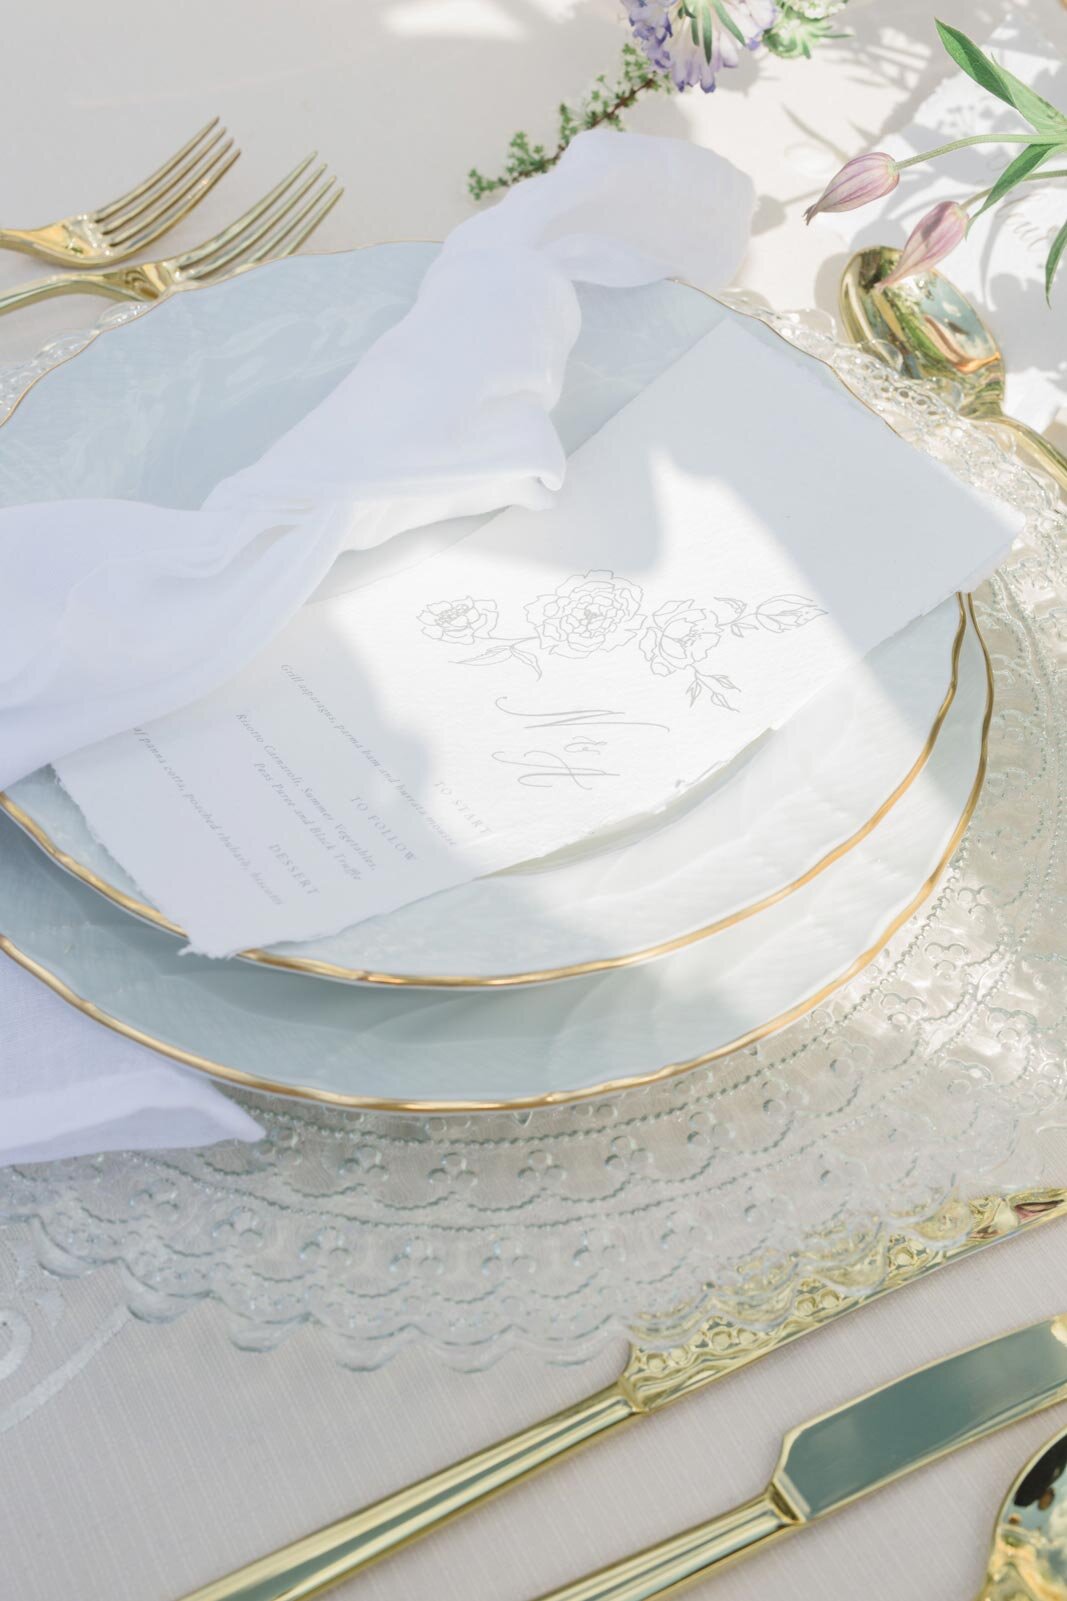 bespoke-wedding-calligraphy-menu-handmade-paper-floral-illustration.jpg